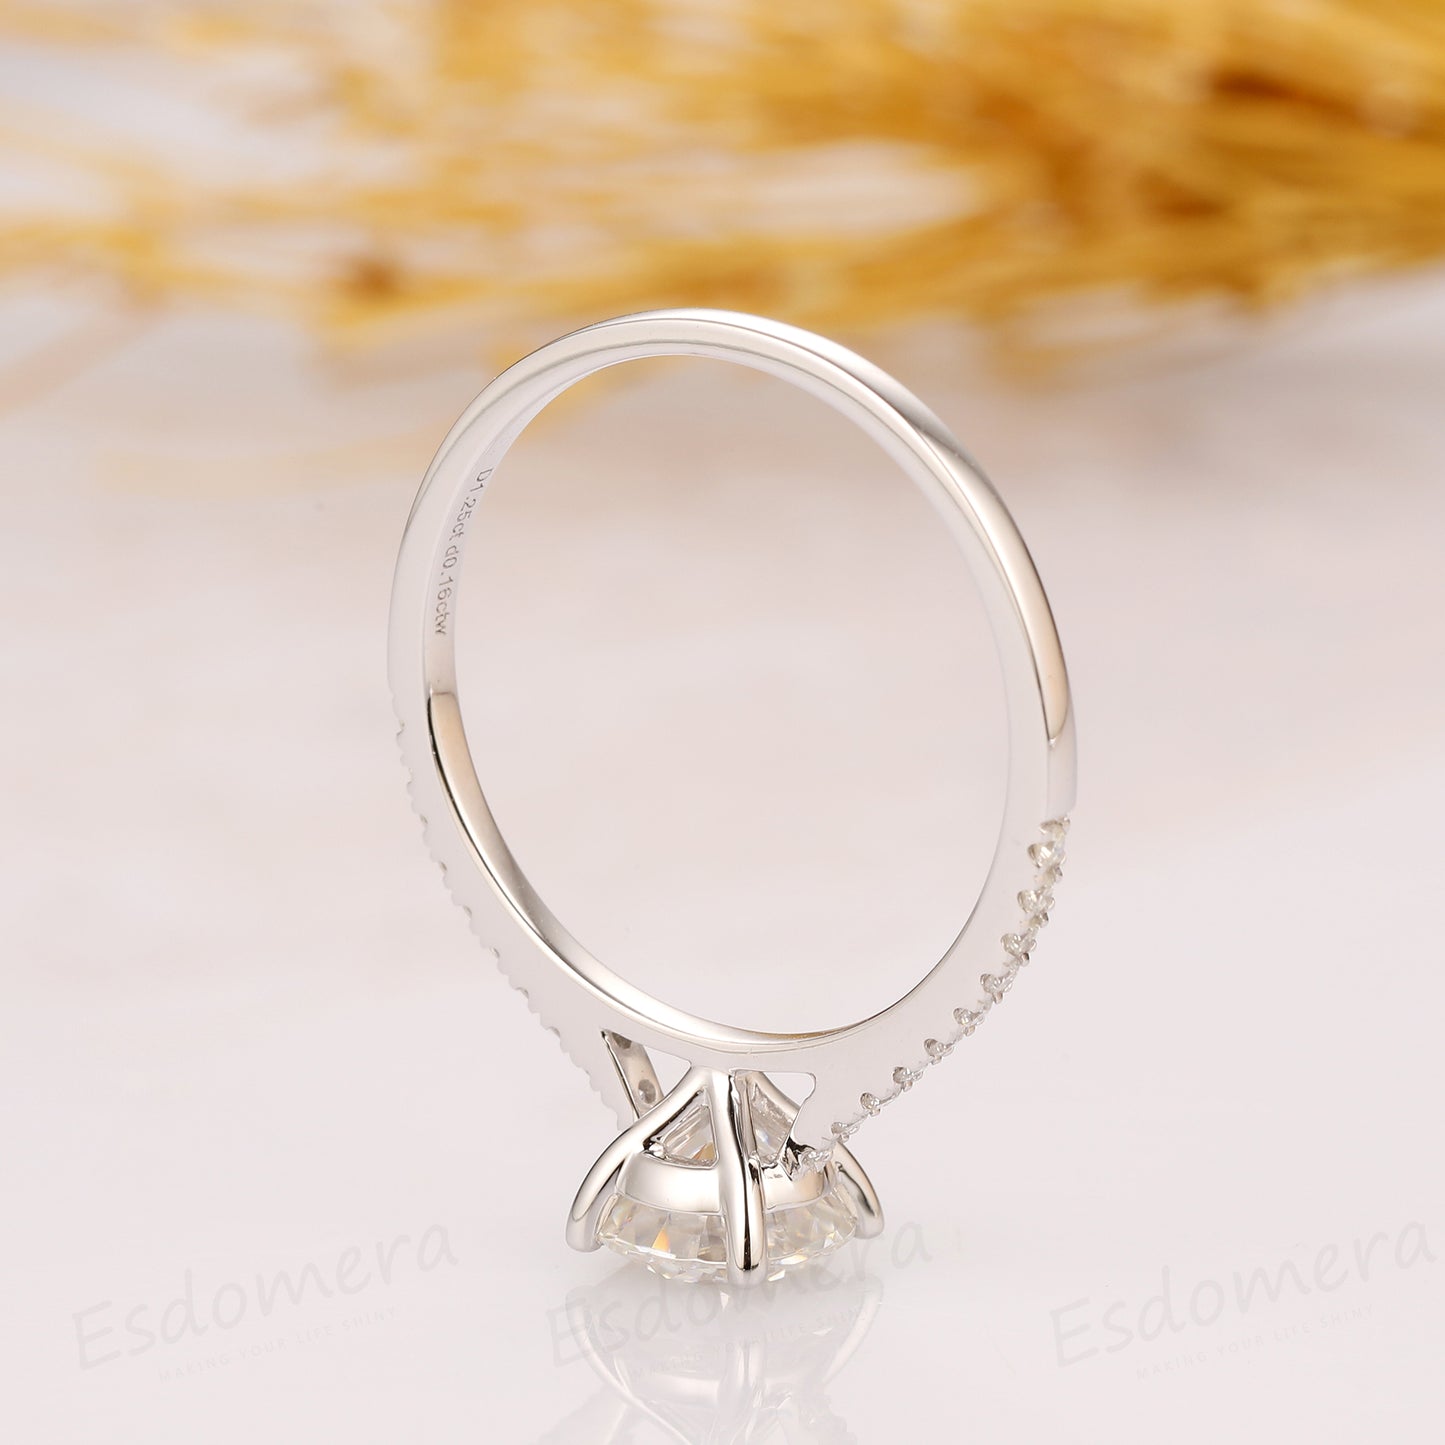 Round Cut 7mm Moissanite Ring, 14k Rose Gold Ring, Art Deco Ring